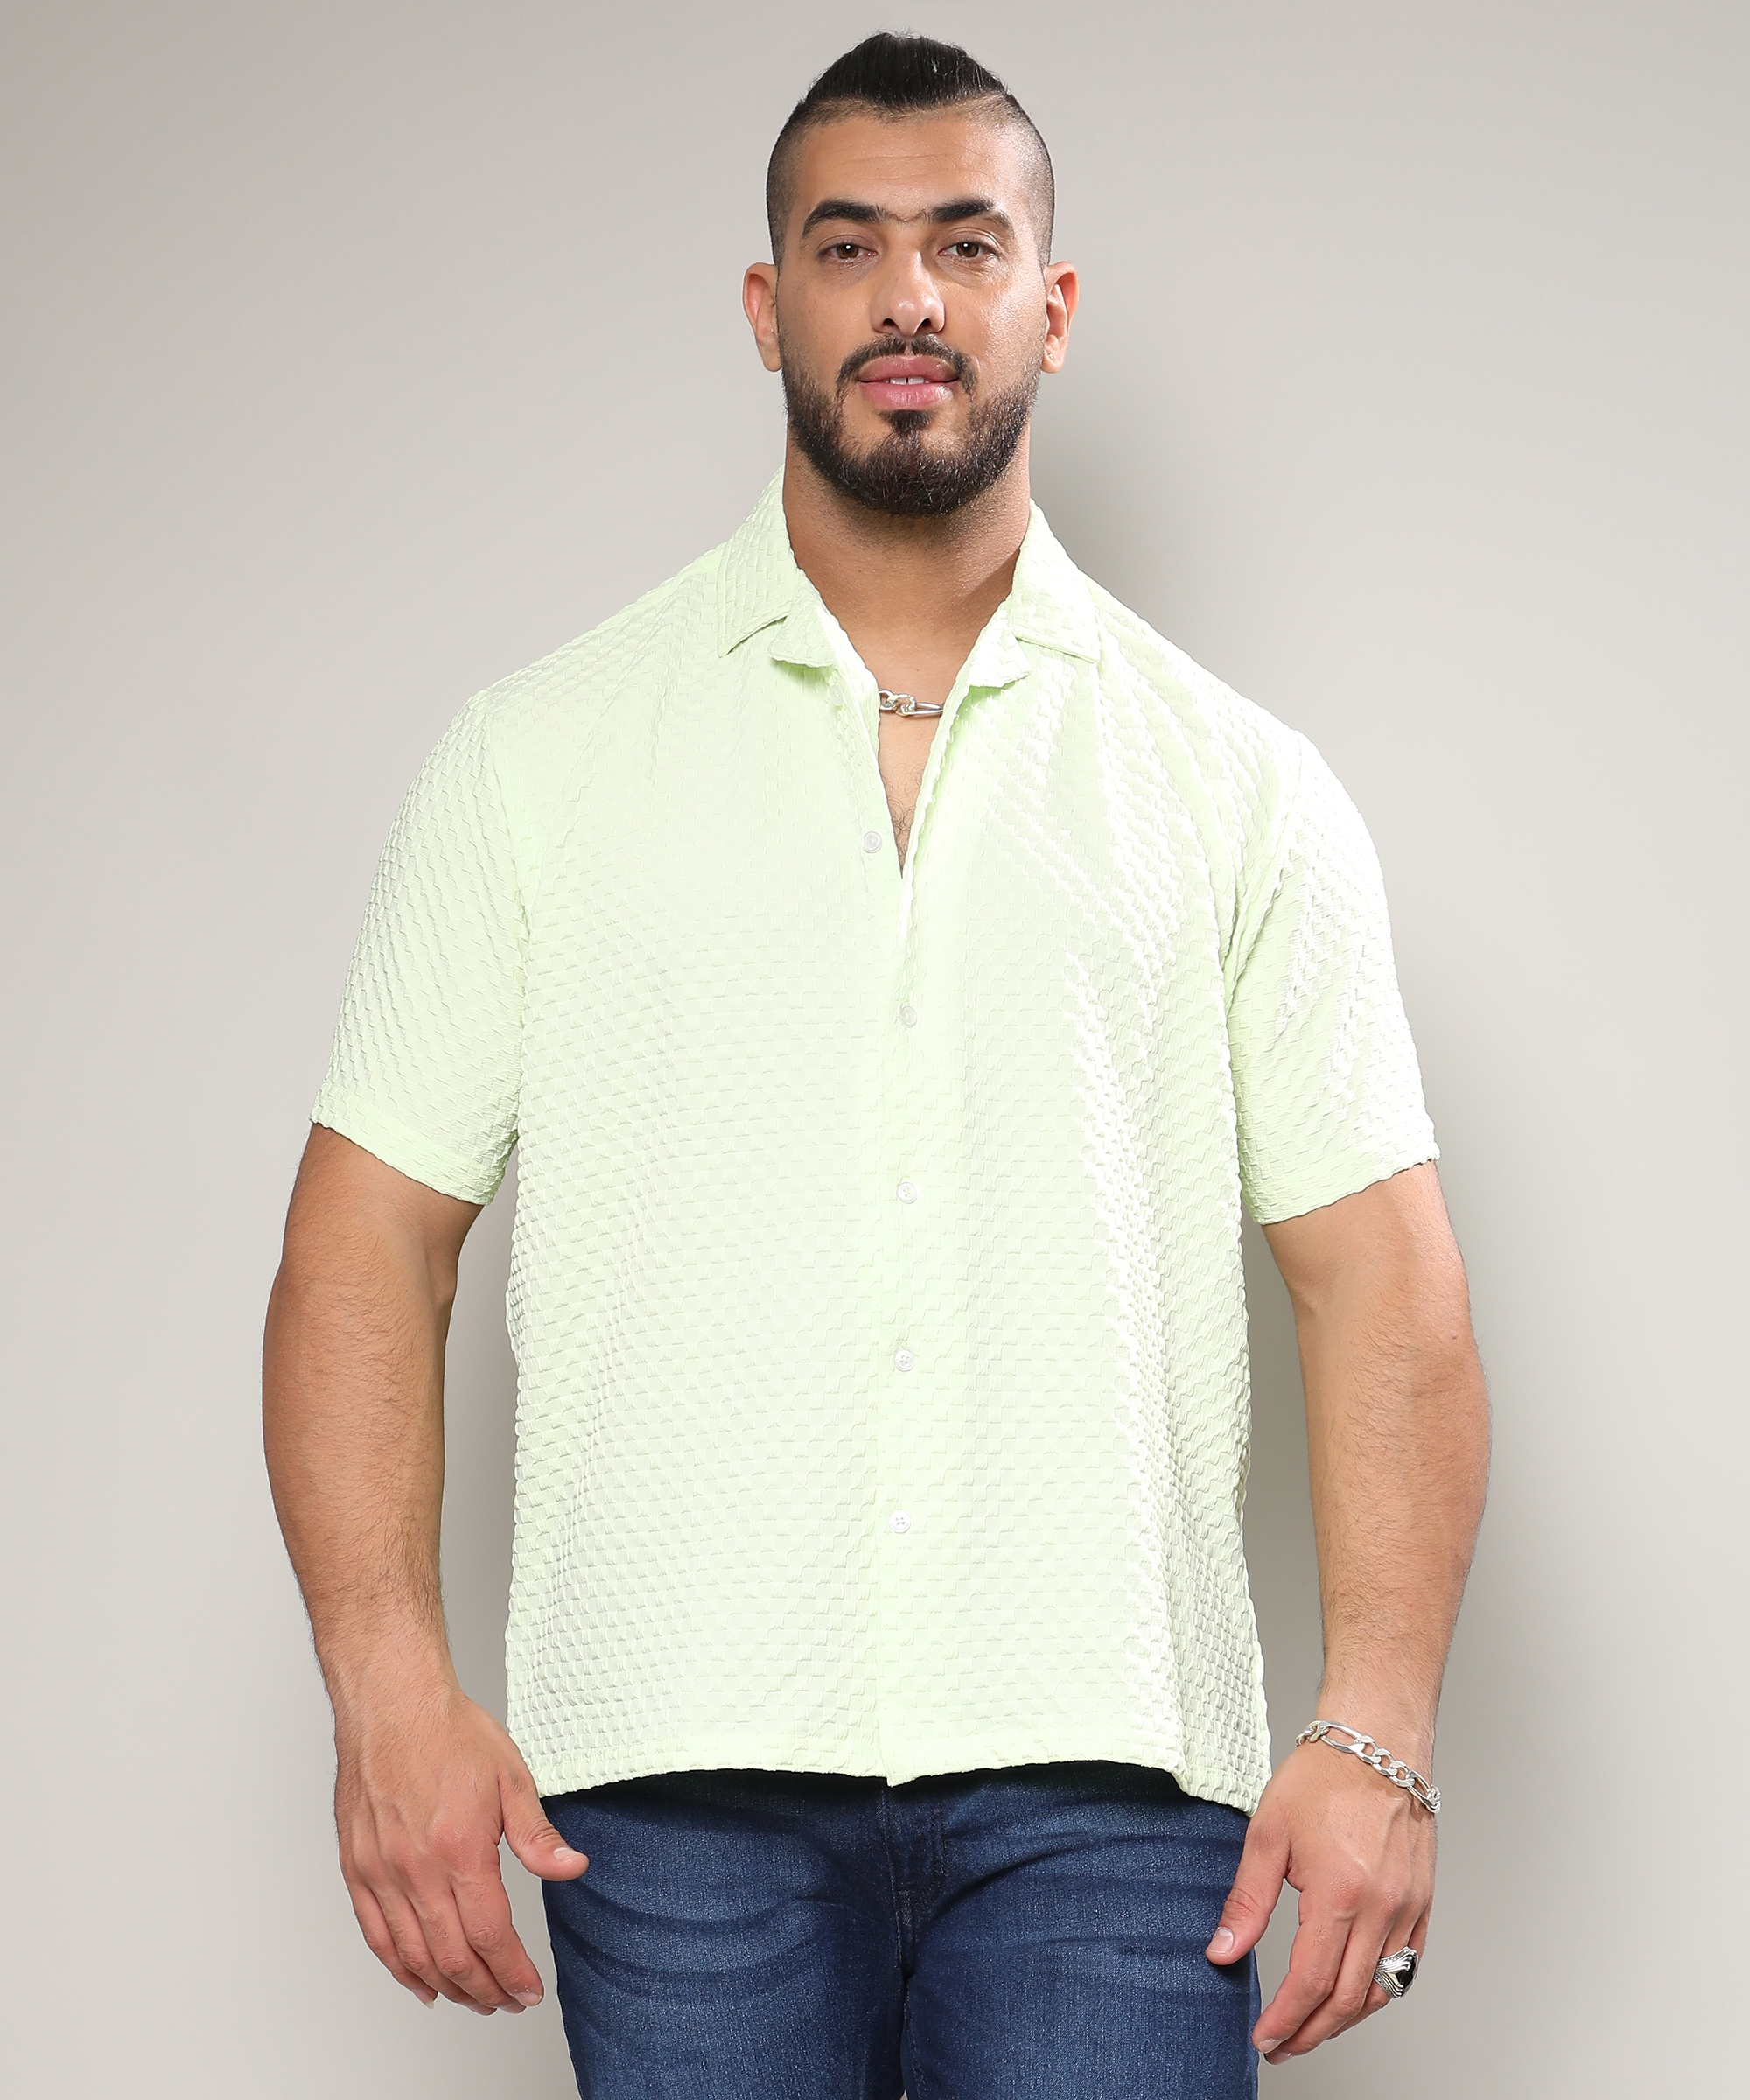 Instafab Plus | Men's Lime Green Self-Design Block Shirt